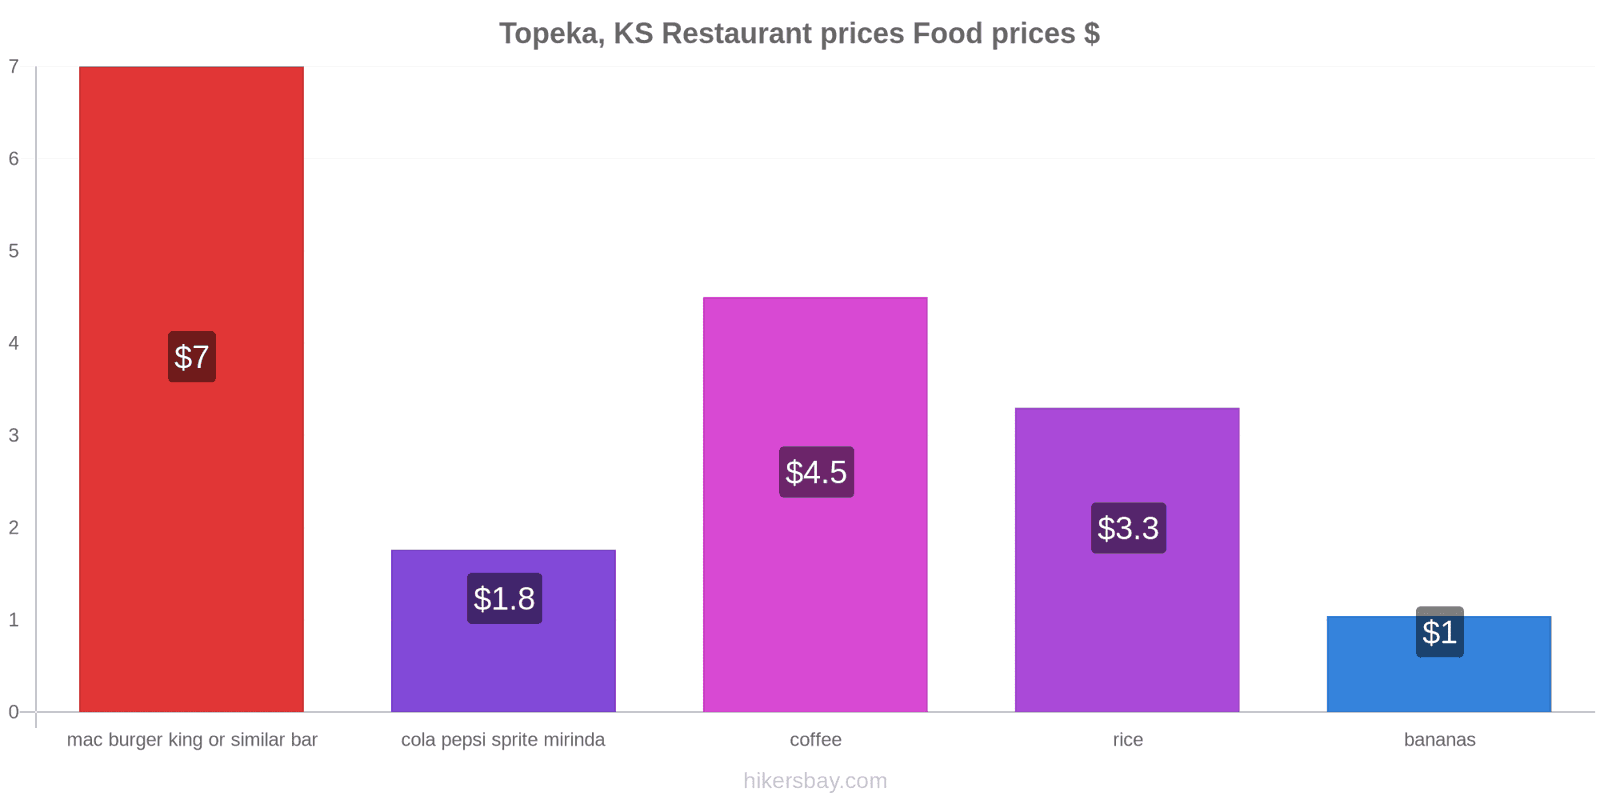 Topeka, KS price changes hikersbay.com